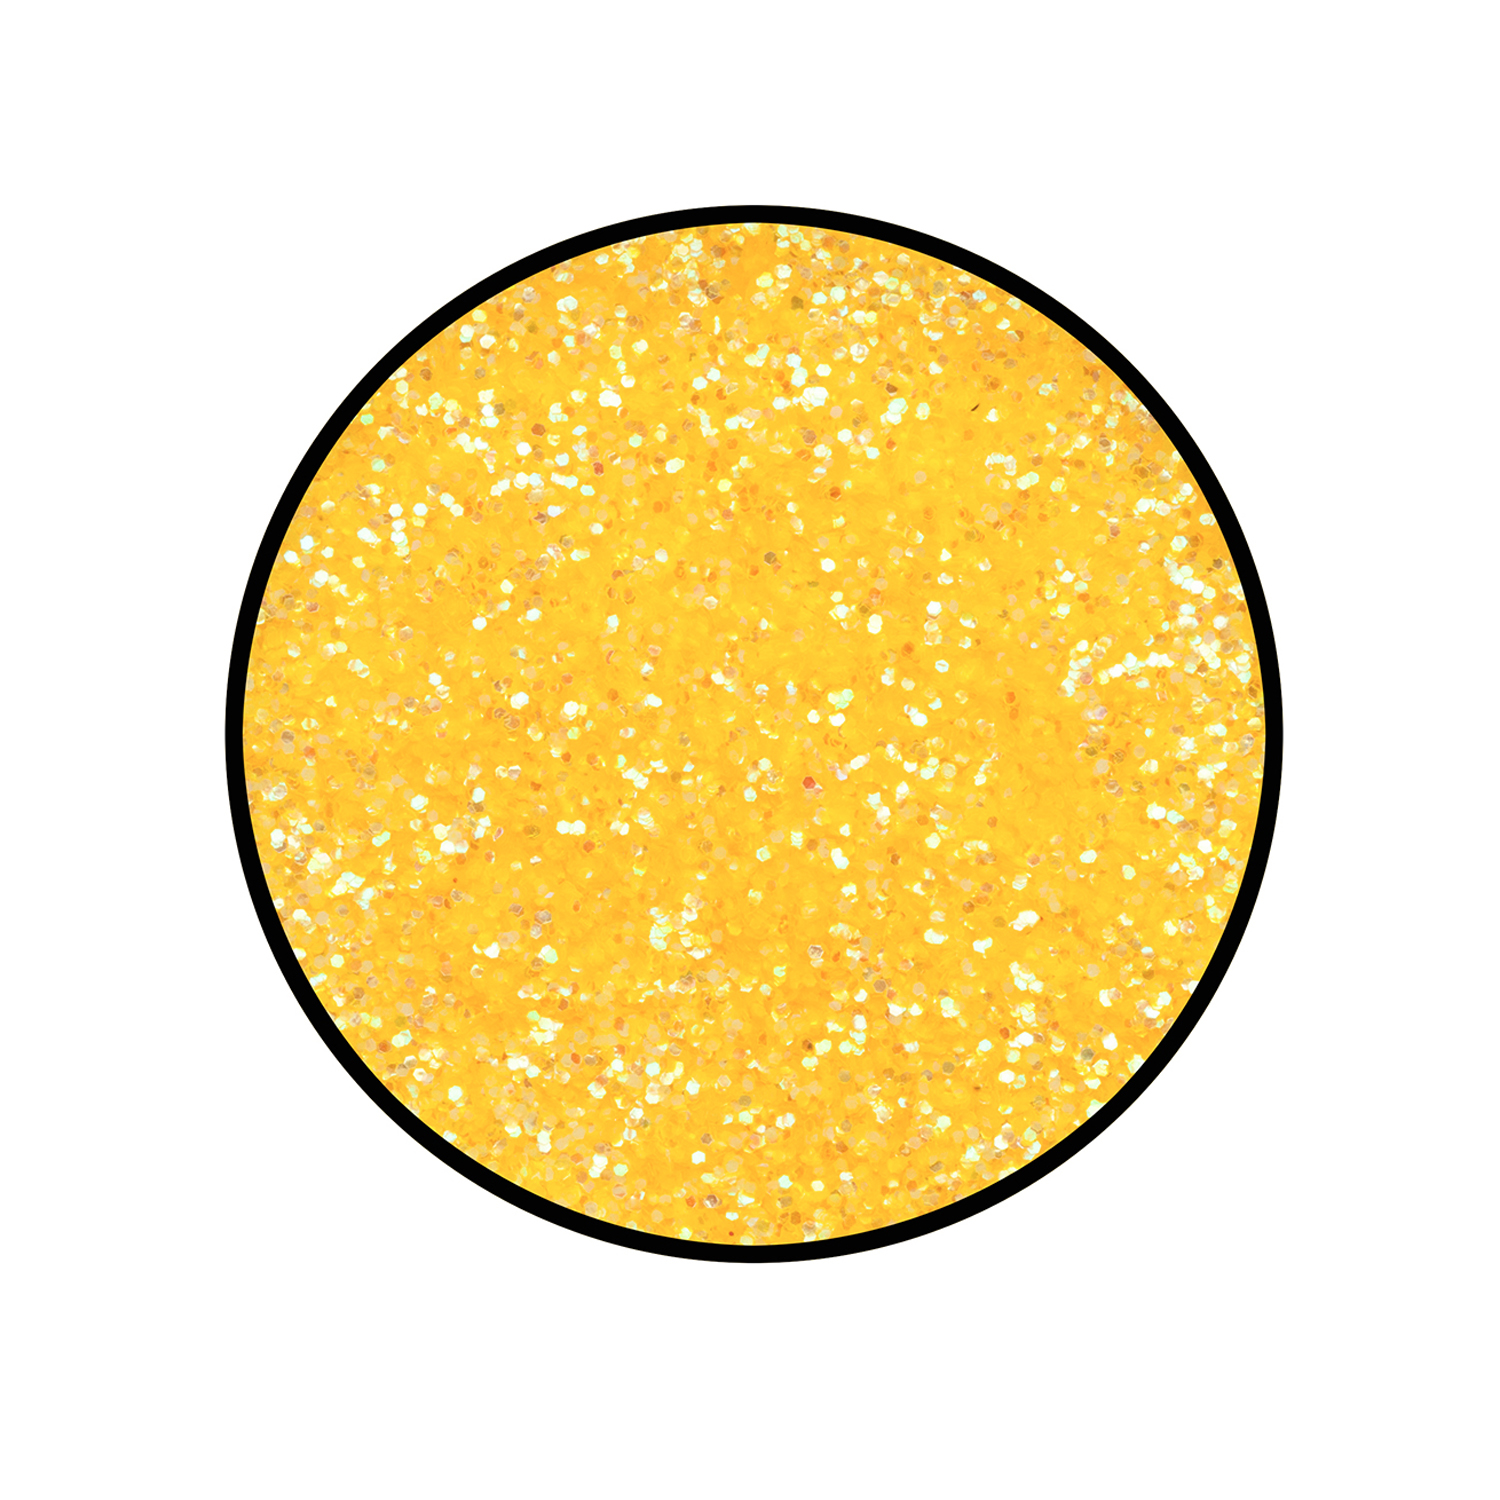 Streuglitzer Eulenspiegel 2g-Dose Candy Yellow